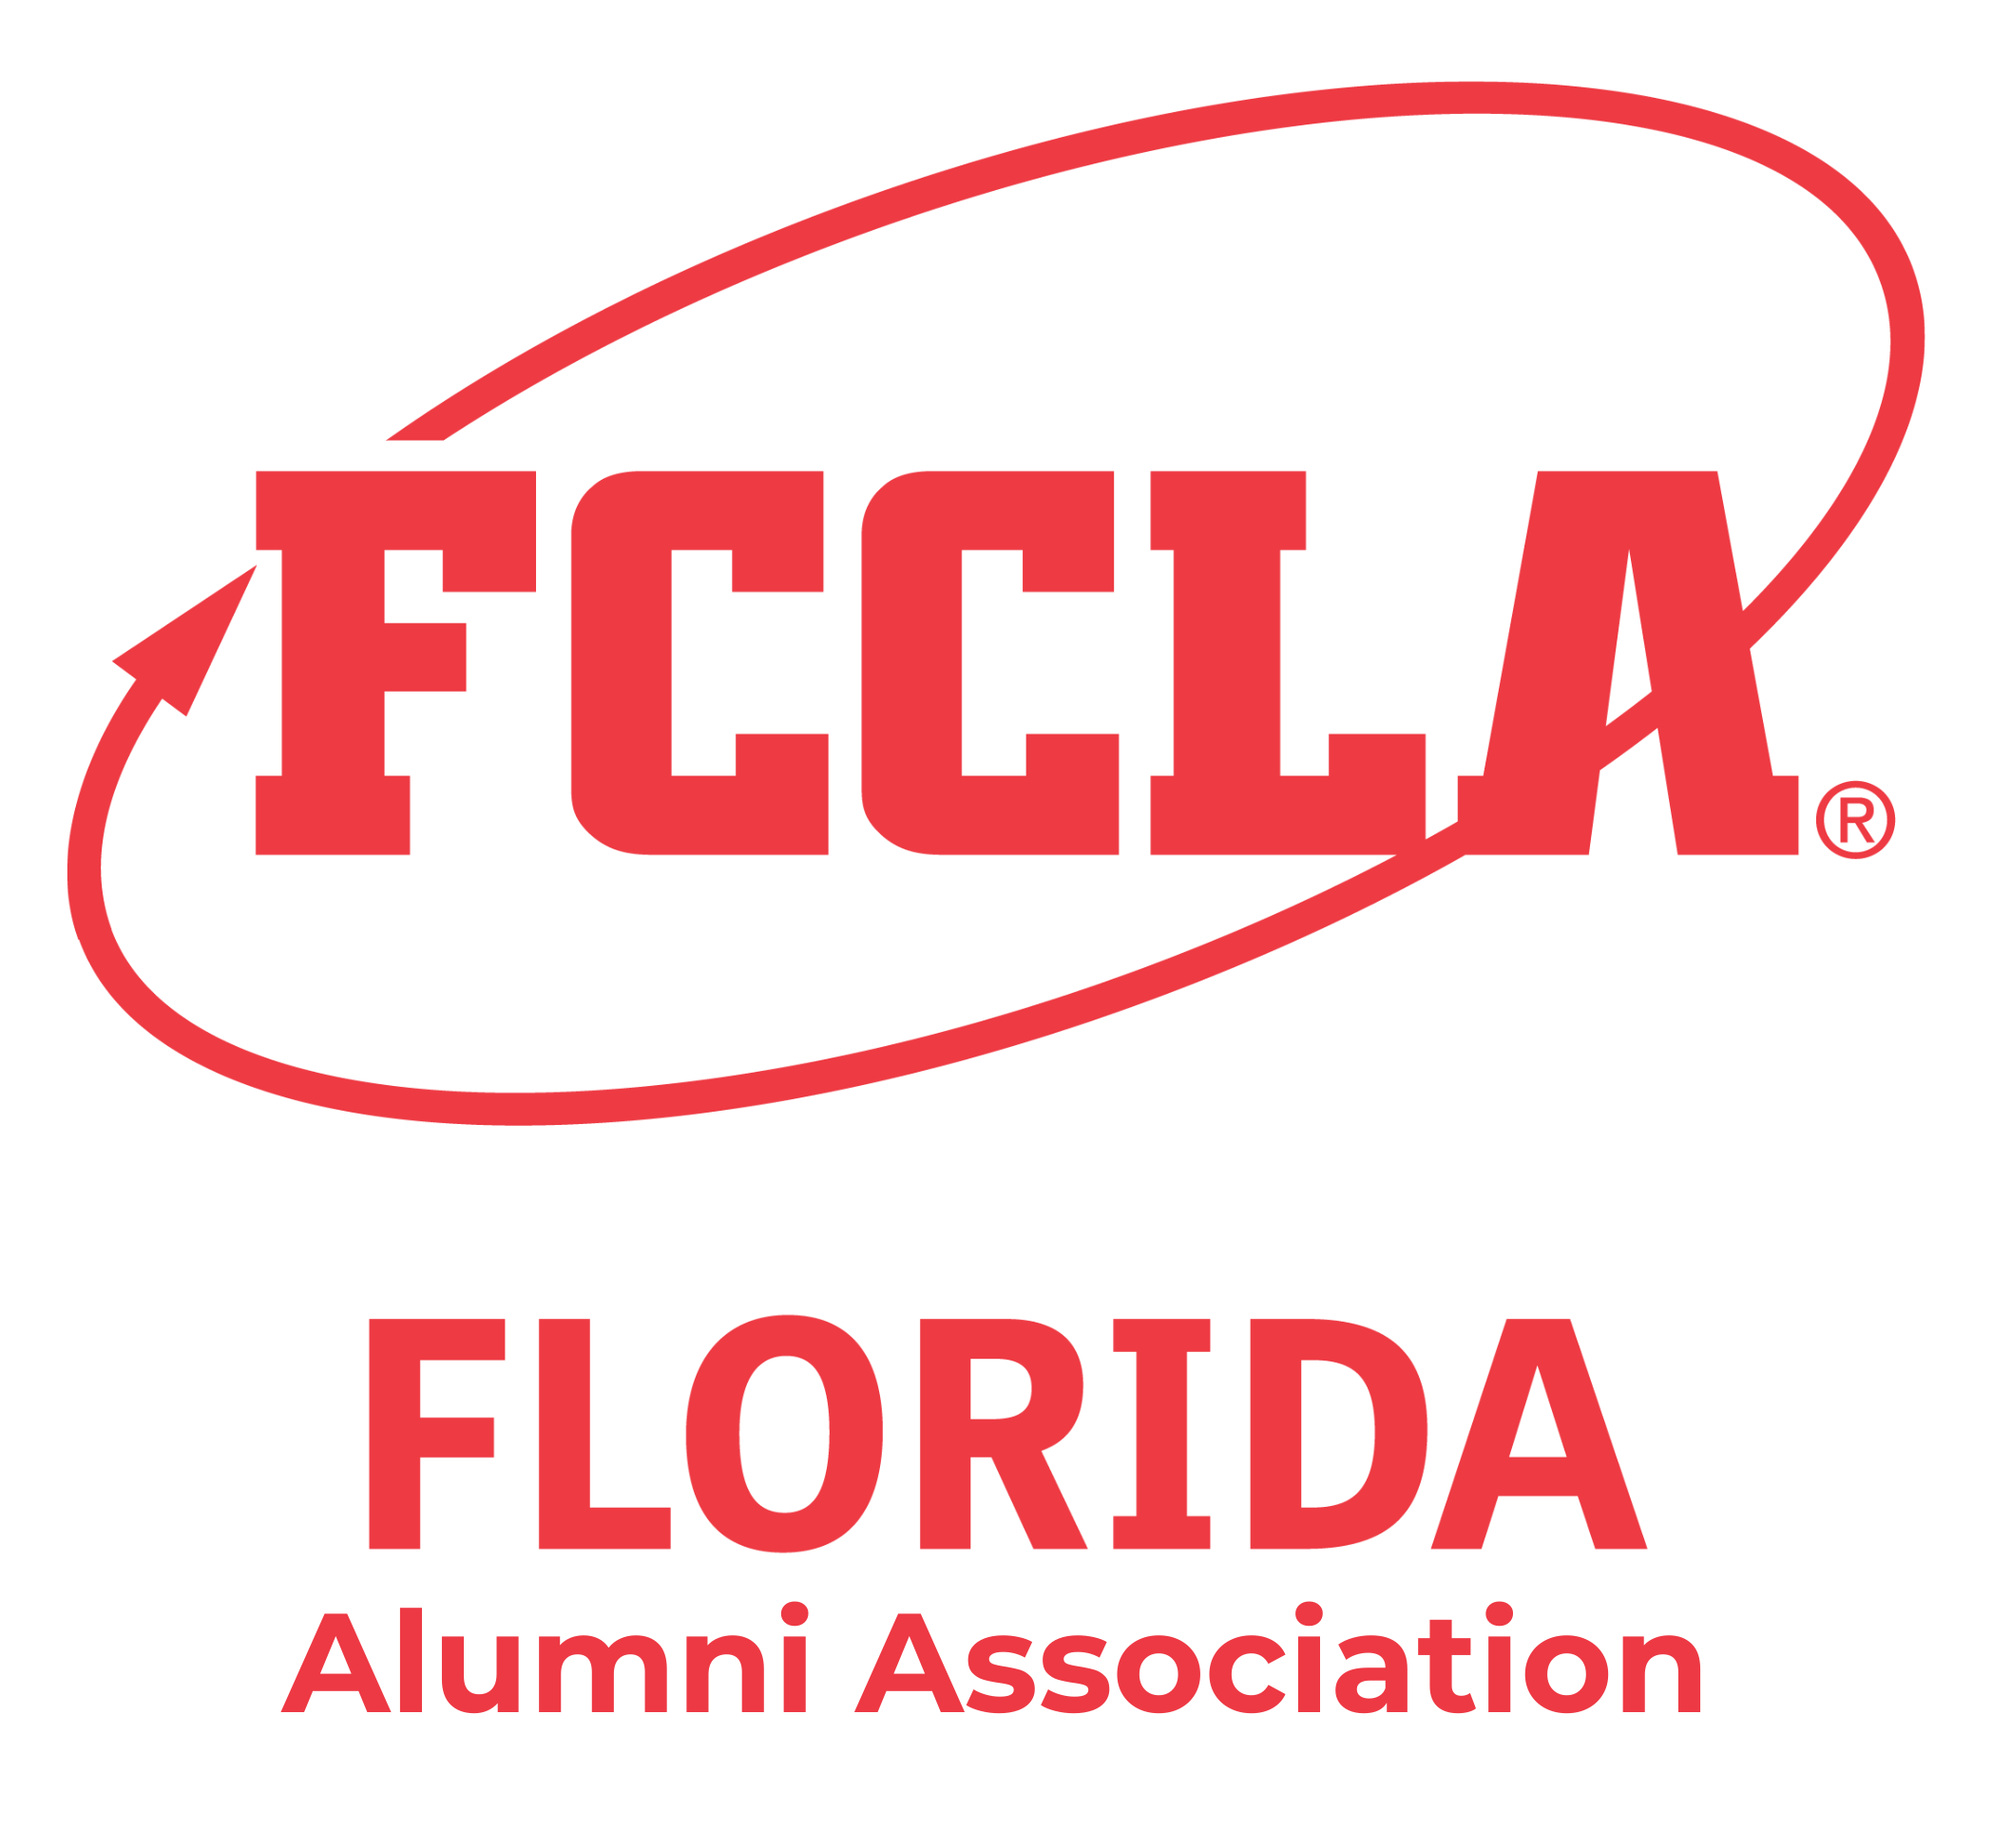 Florida FCCLA Alumni Association